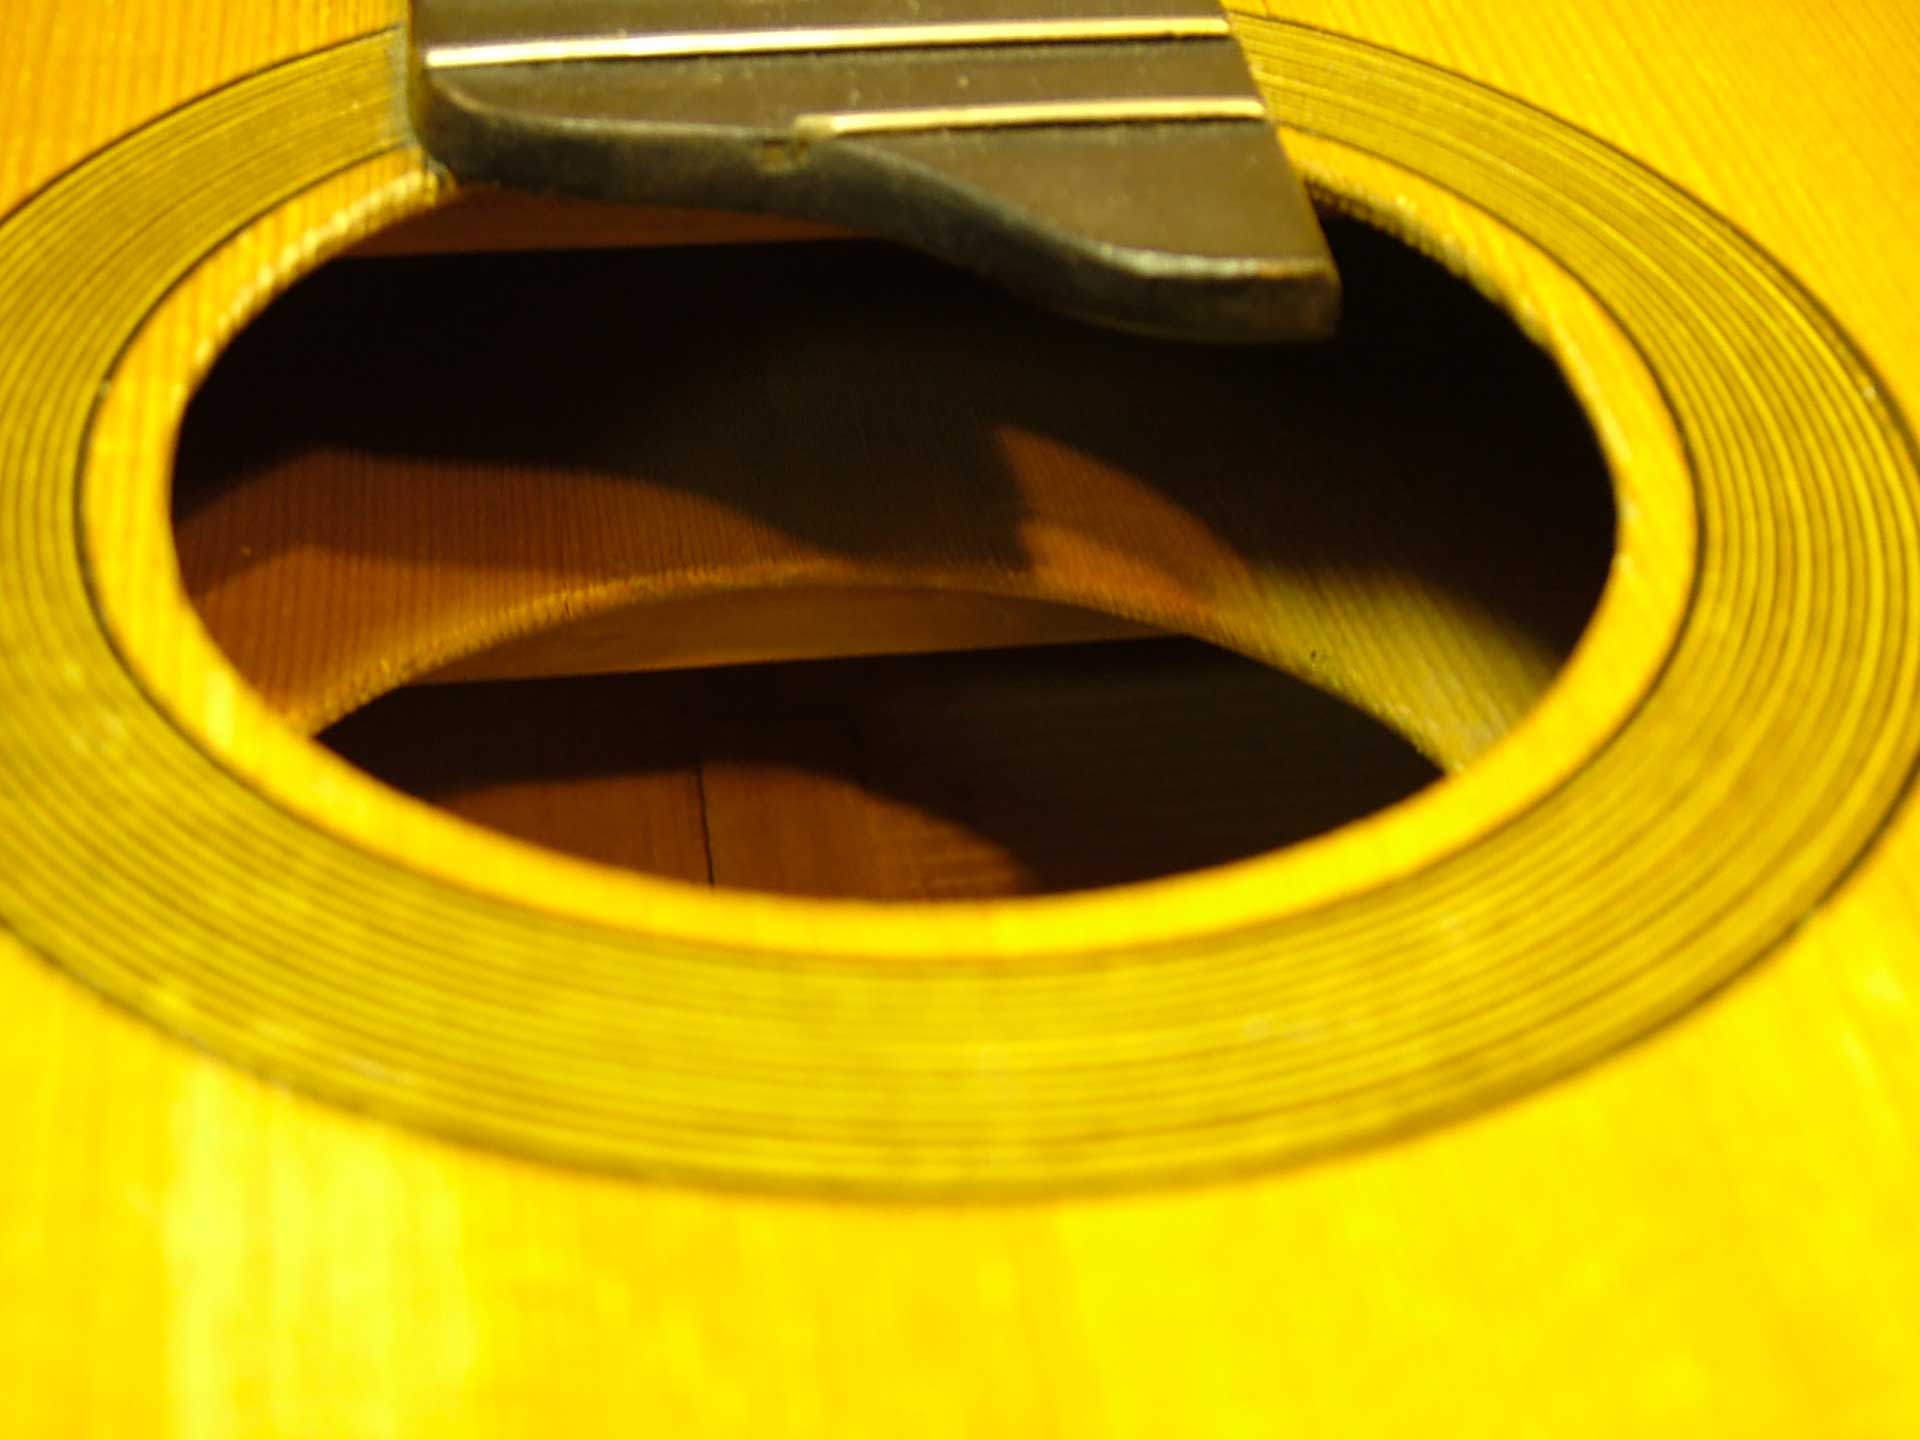 Rowies Guitar Restoration